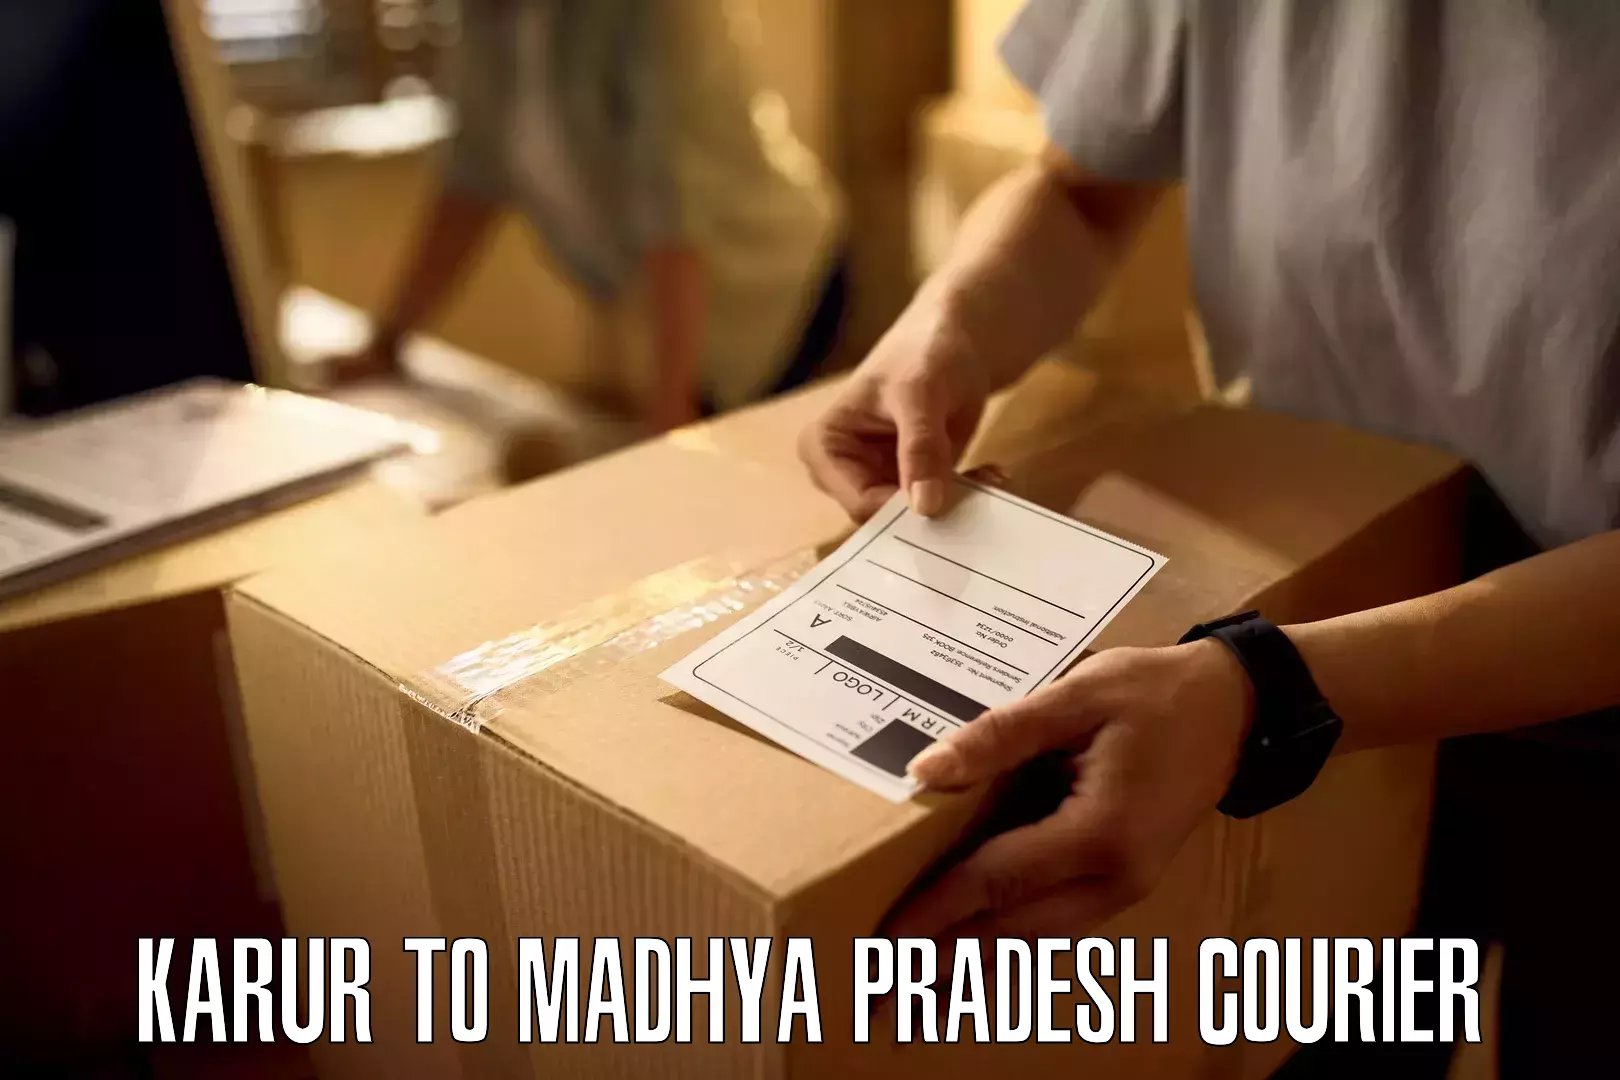 Nationwide delivery network Karur to Madhya Pradesh